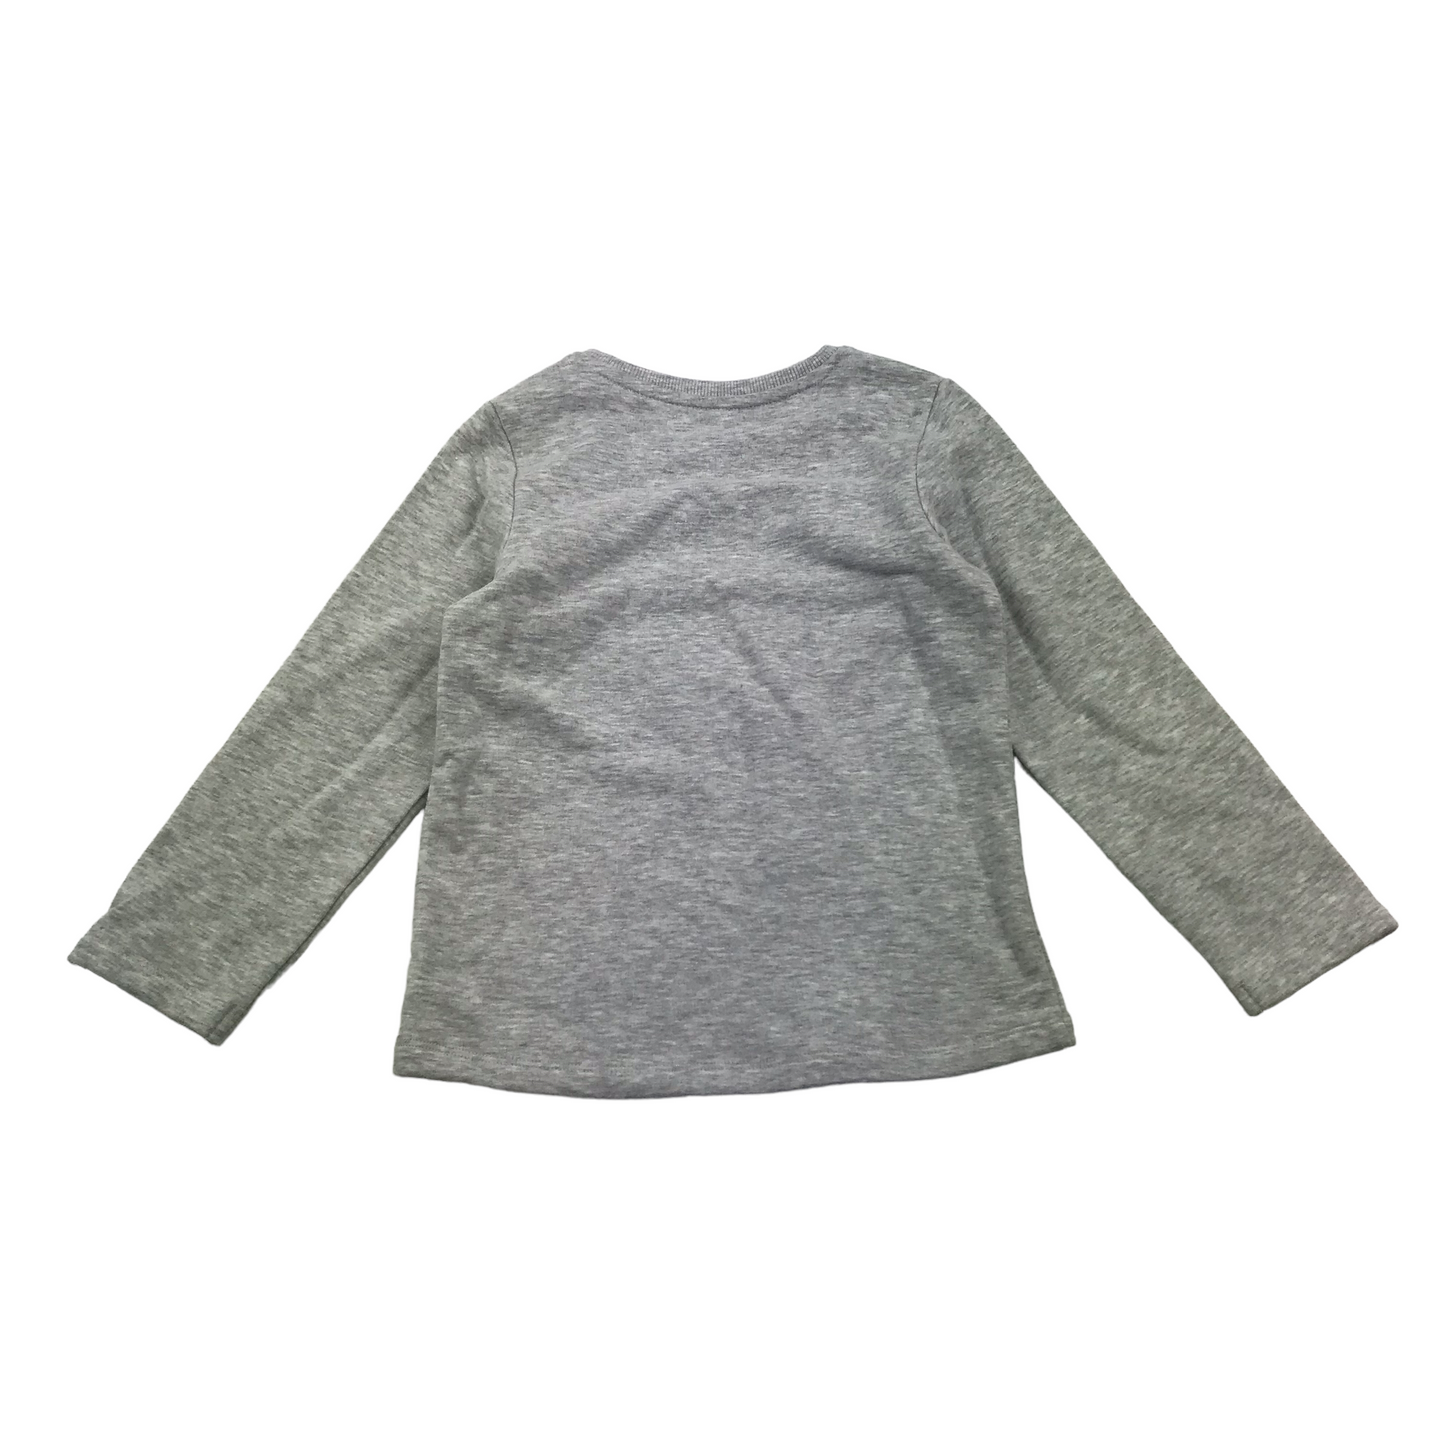 Nutmeg Grey Print Sweater Jumper age 5